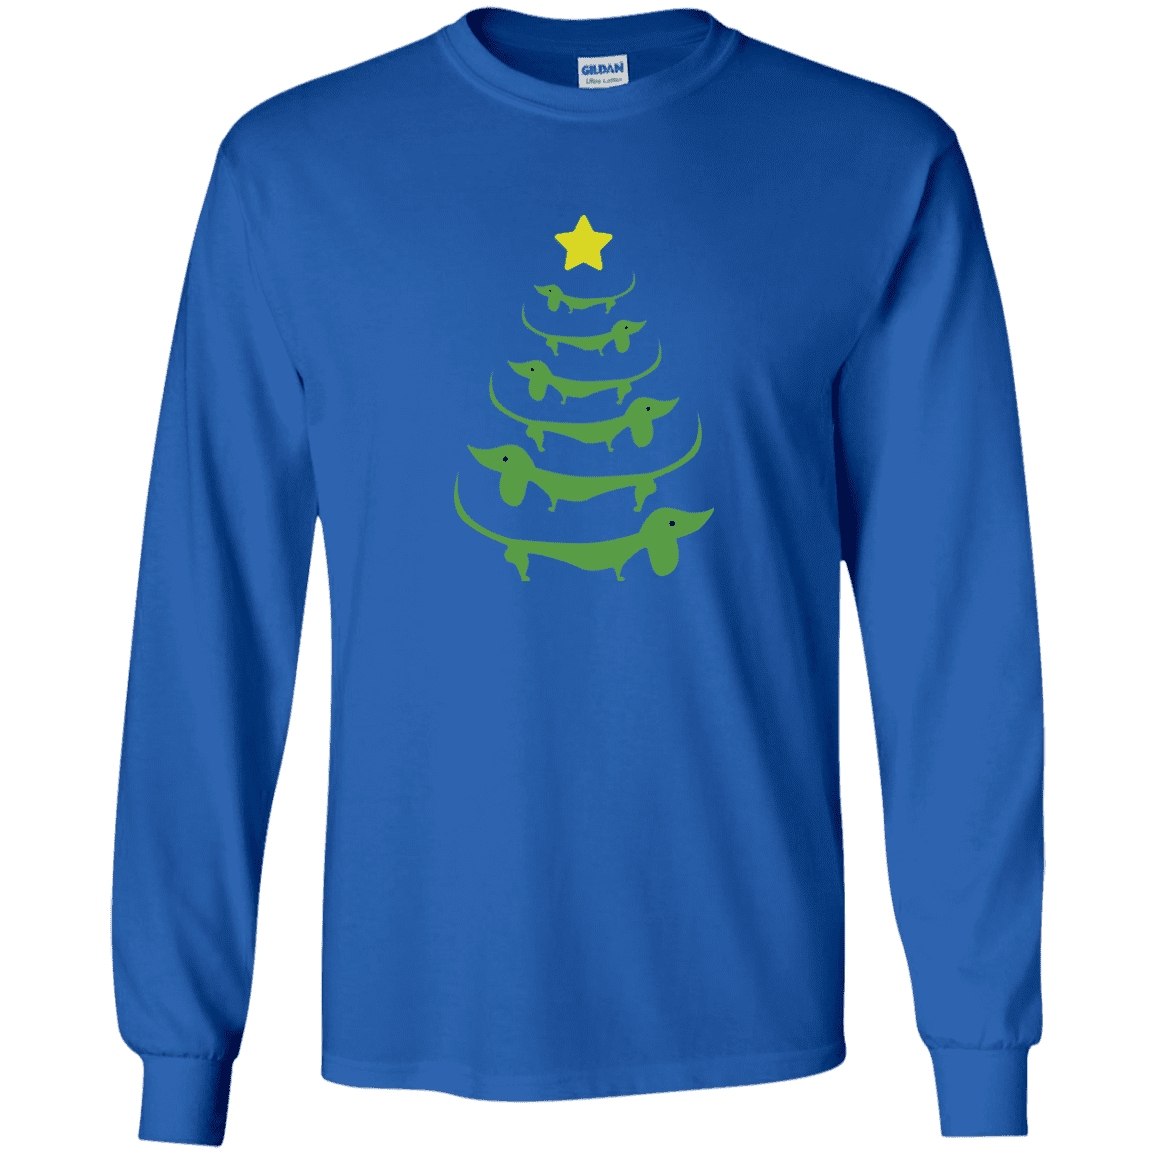 Dog Christmas Tree - Long Sleeve T Shirt.